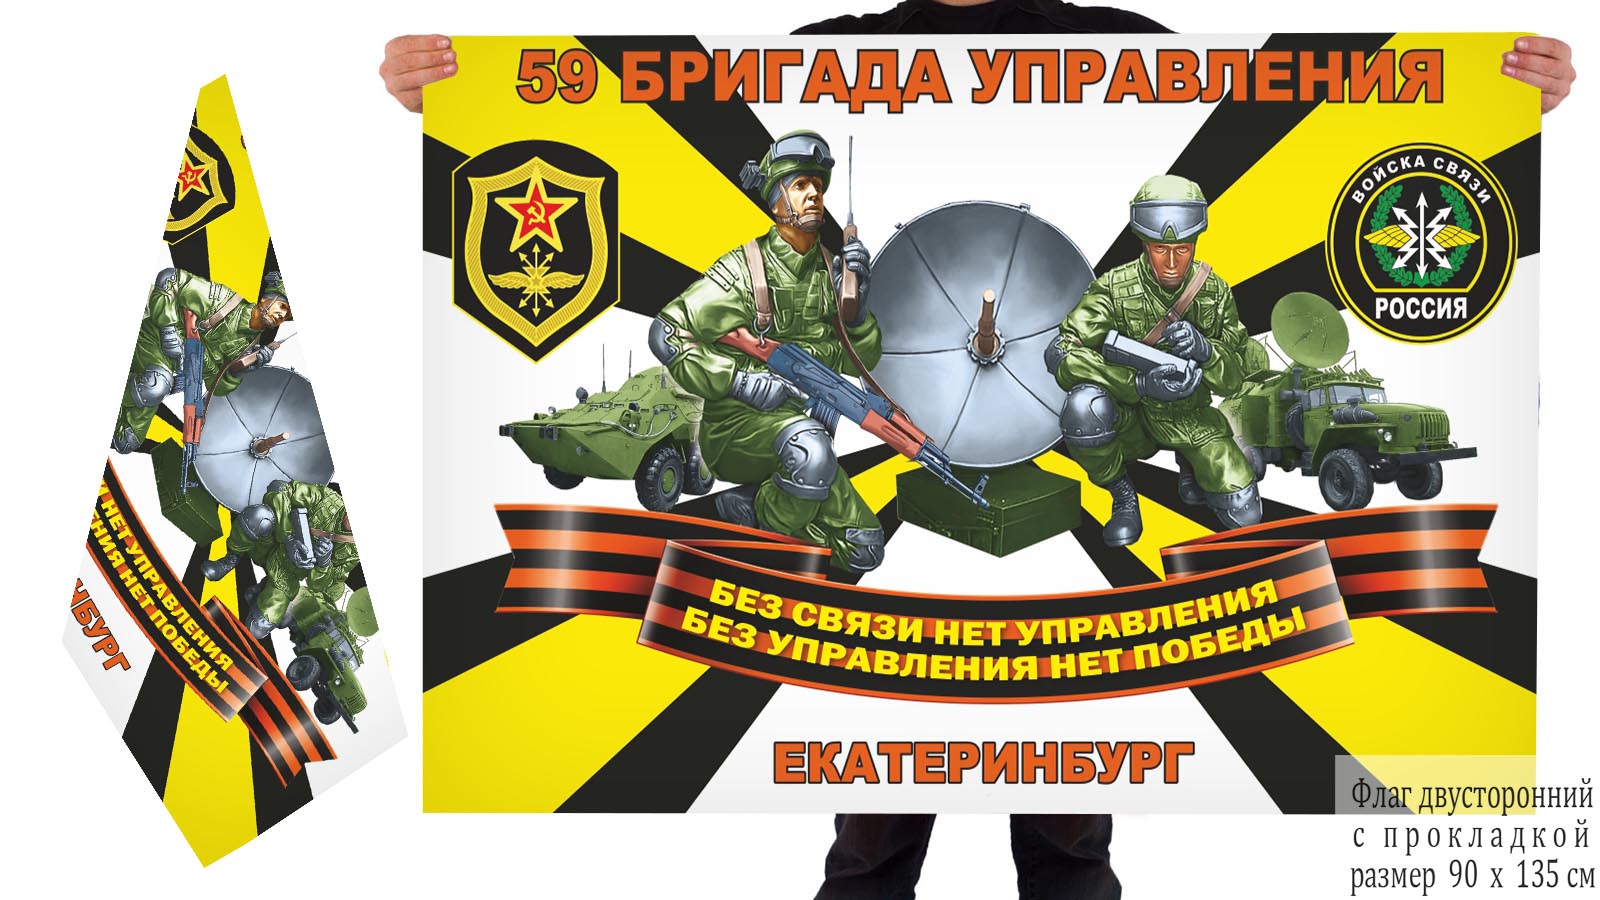 Двусторонний флаг 59 бригада управления войск связи